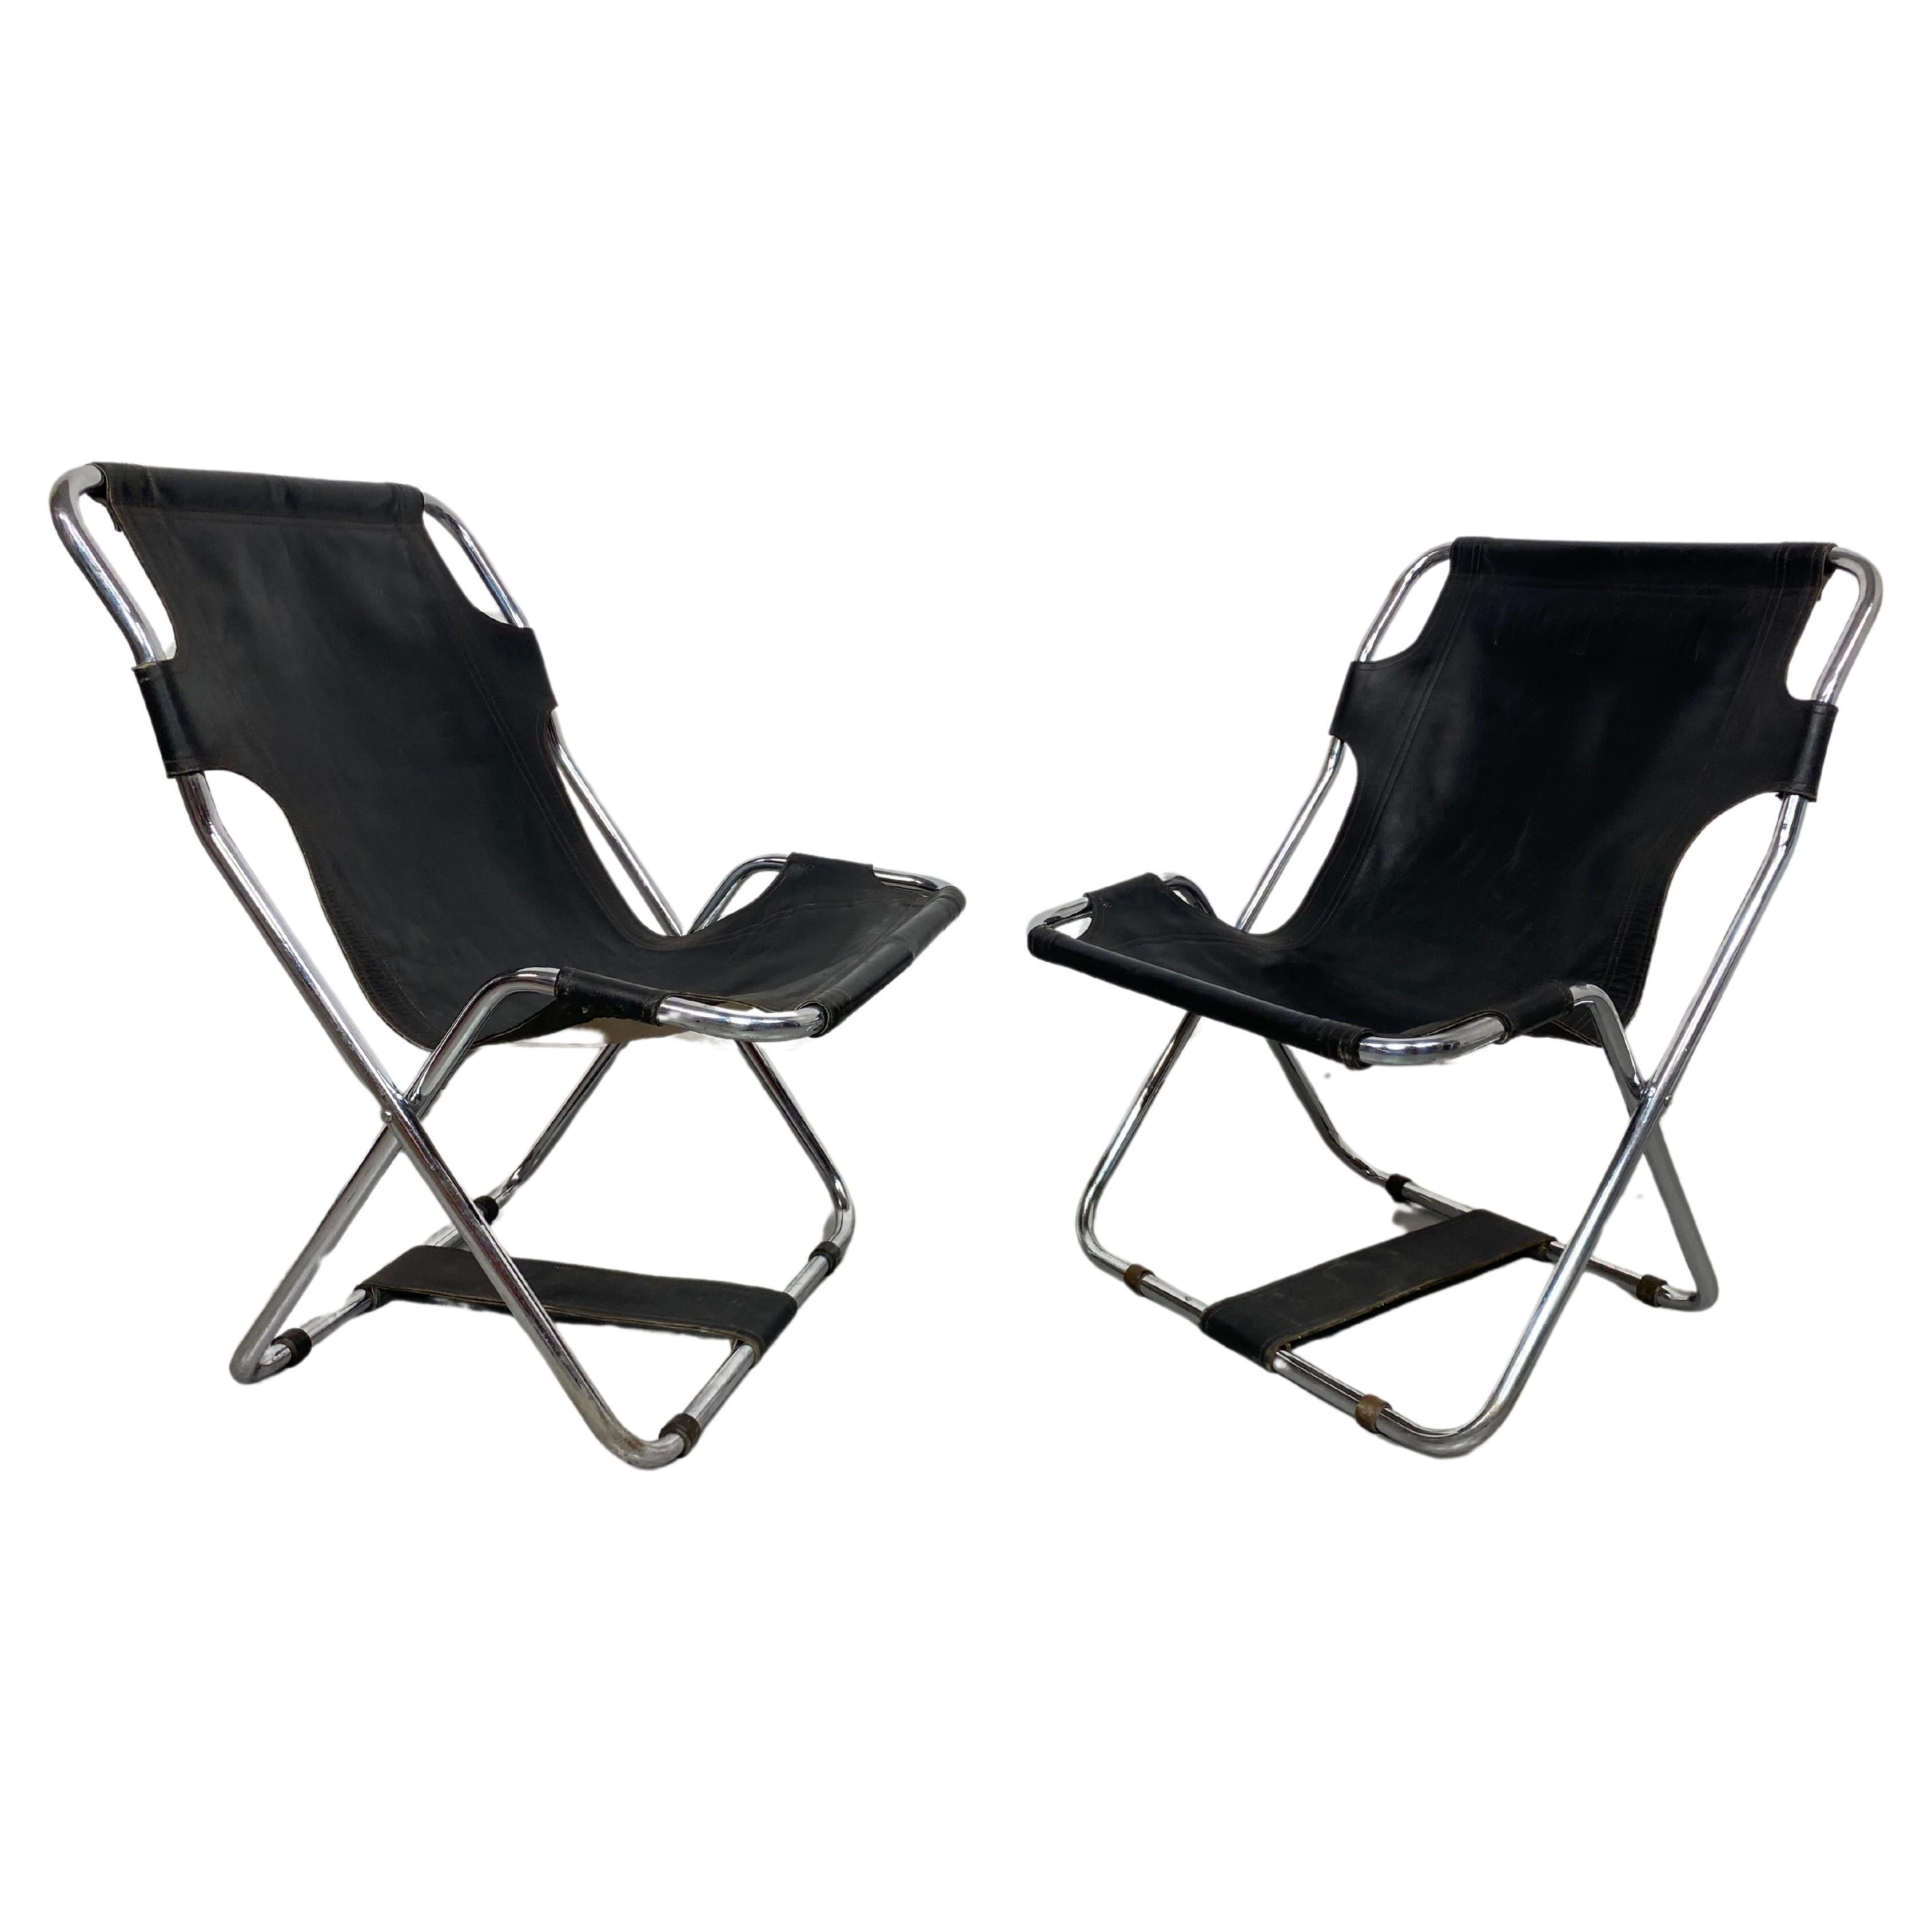 Bauhaus folding chairs